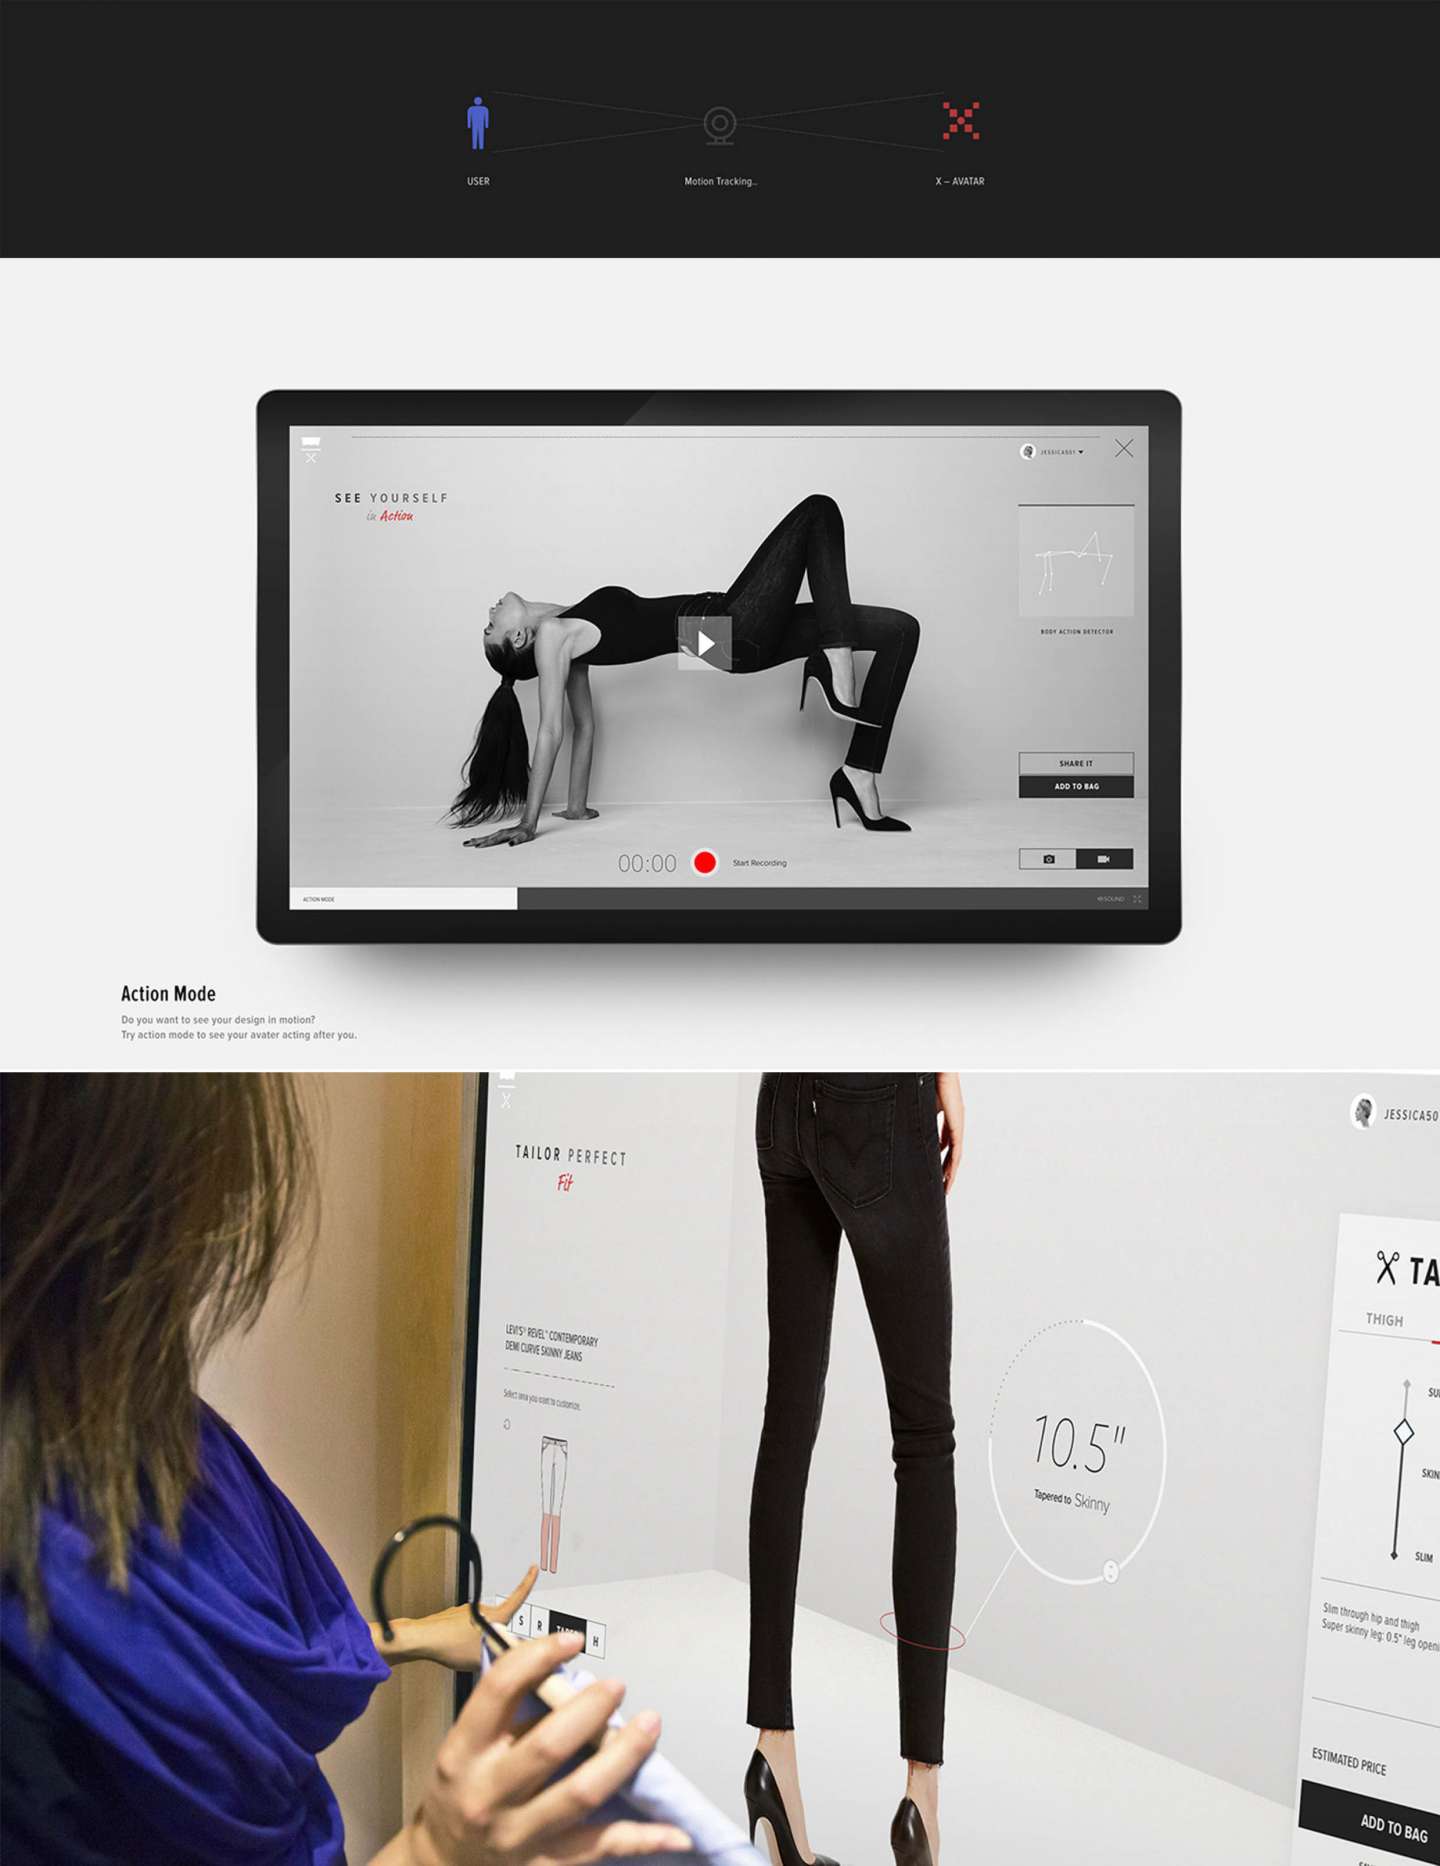 Levi's X - Virtual 3D Tailoring Platform